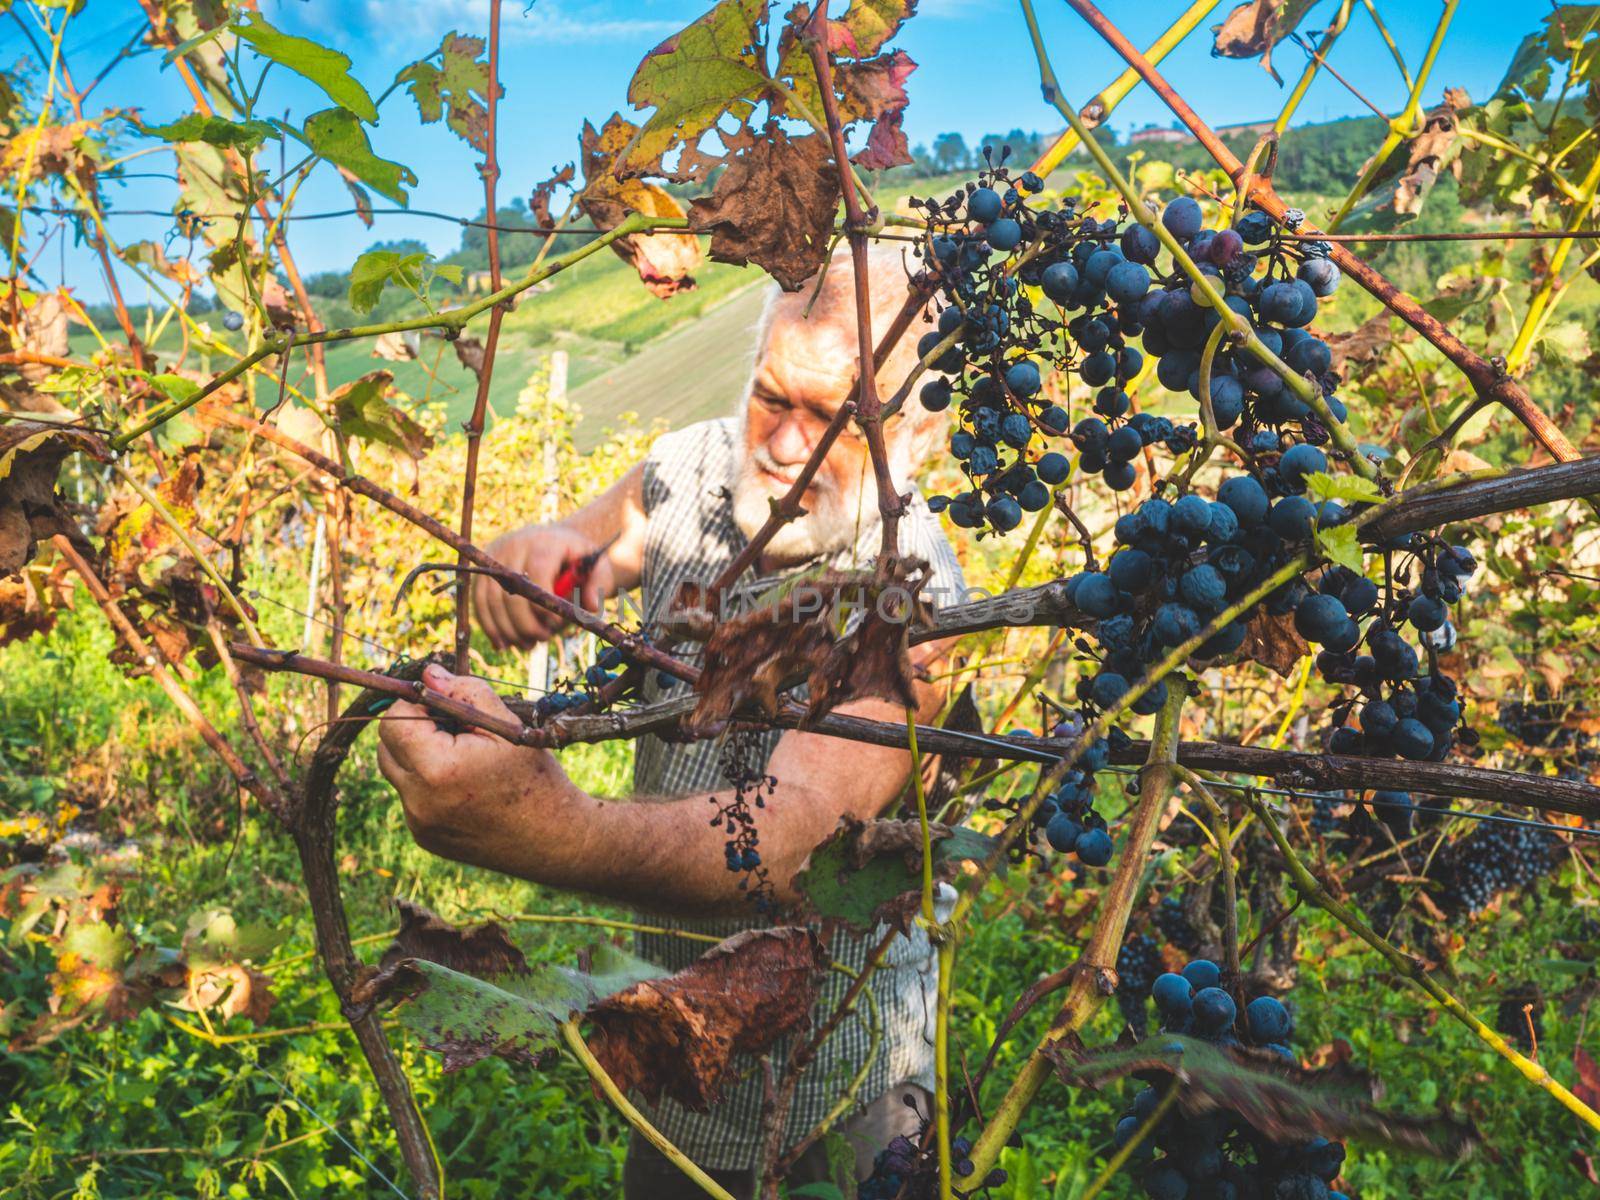 Piacenza, Italy - September 2022 caucasian senior farmer harvesting grapes by verbano